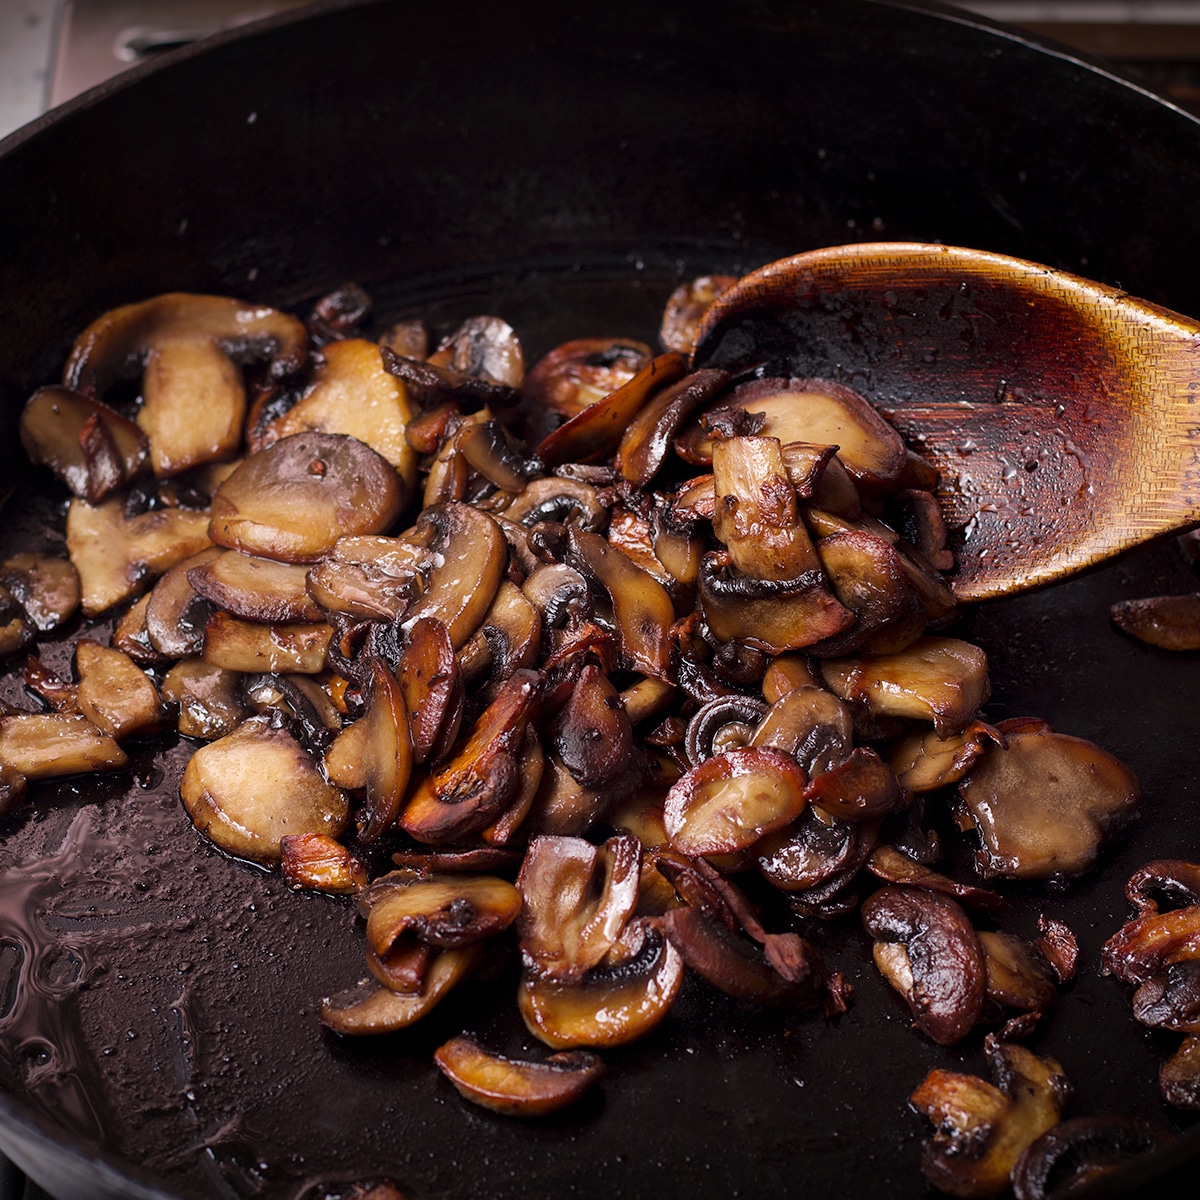 Cooking sliced mushrooms in a skillet until golden and caramelized.